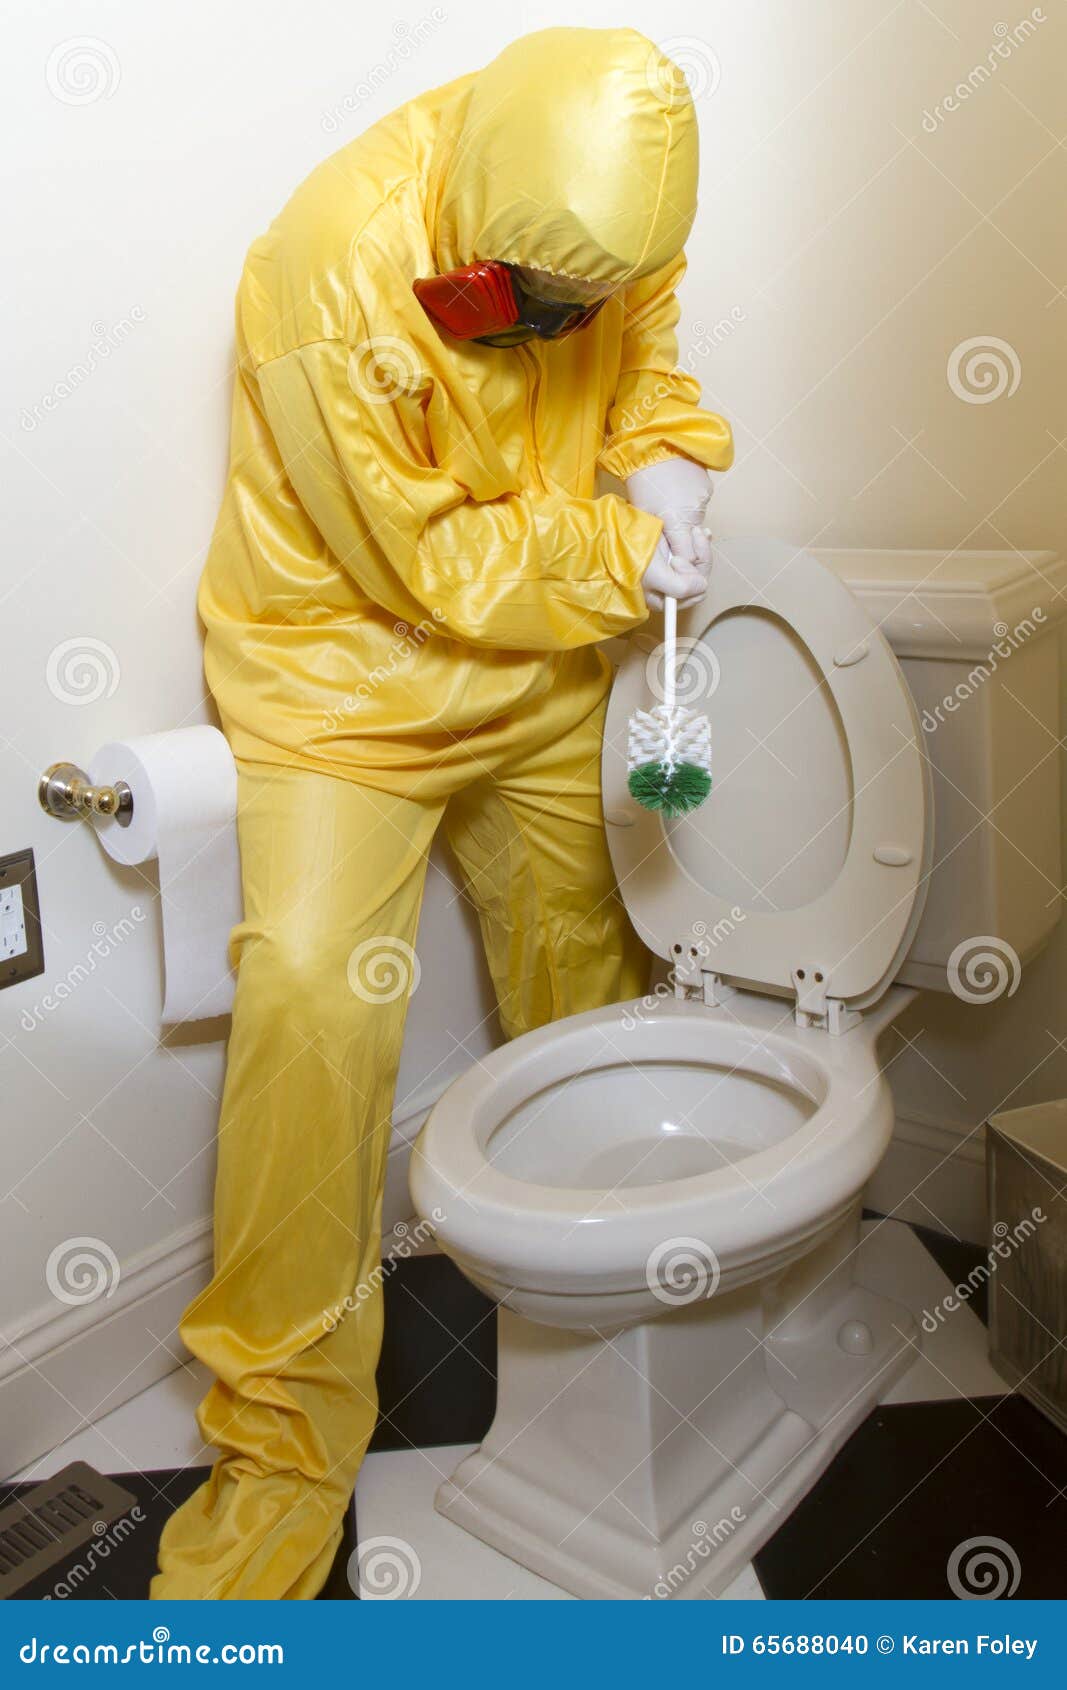 woman cleaning haz mat toilet